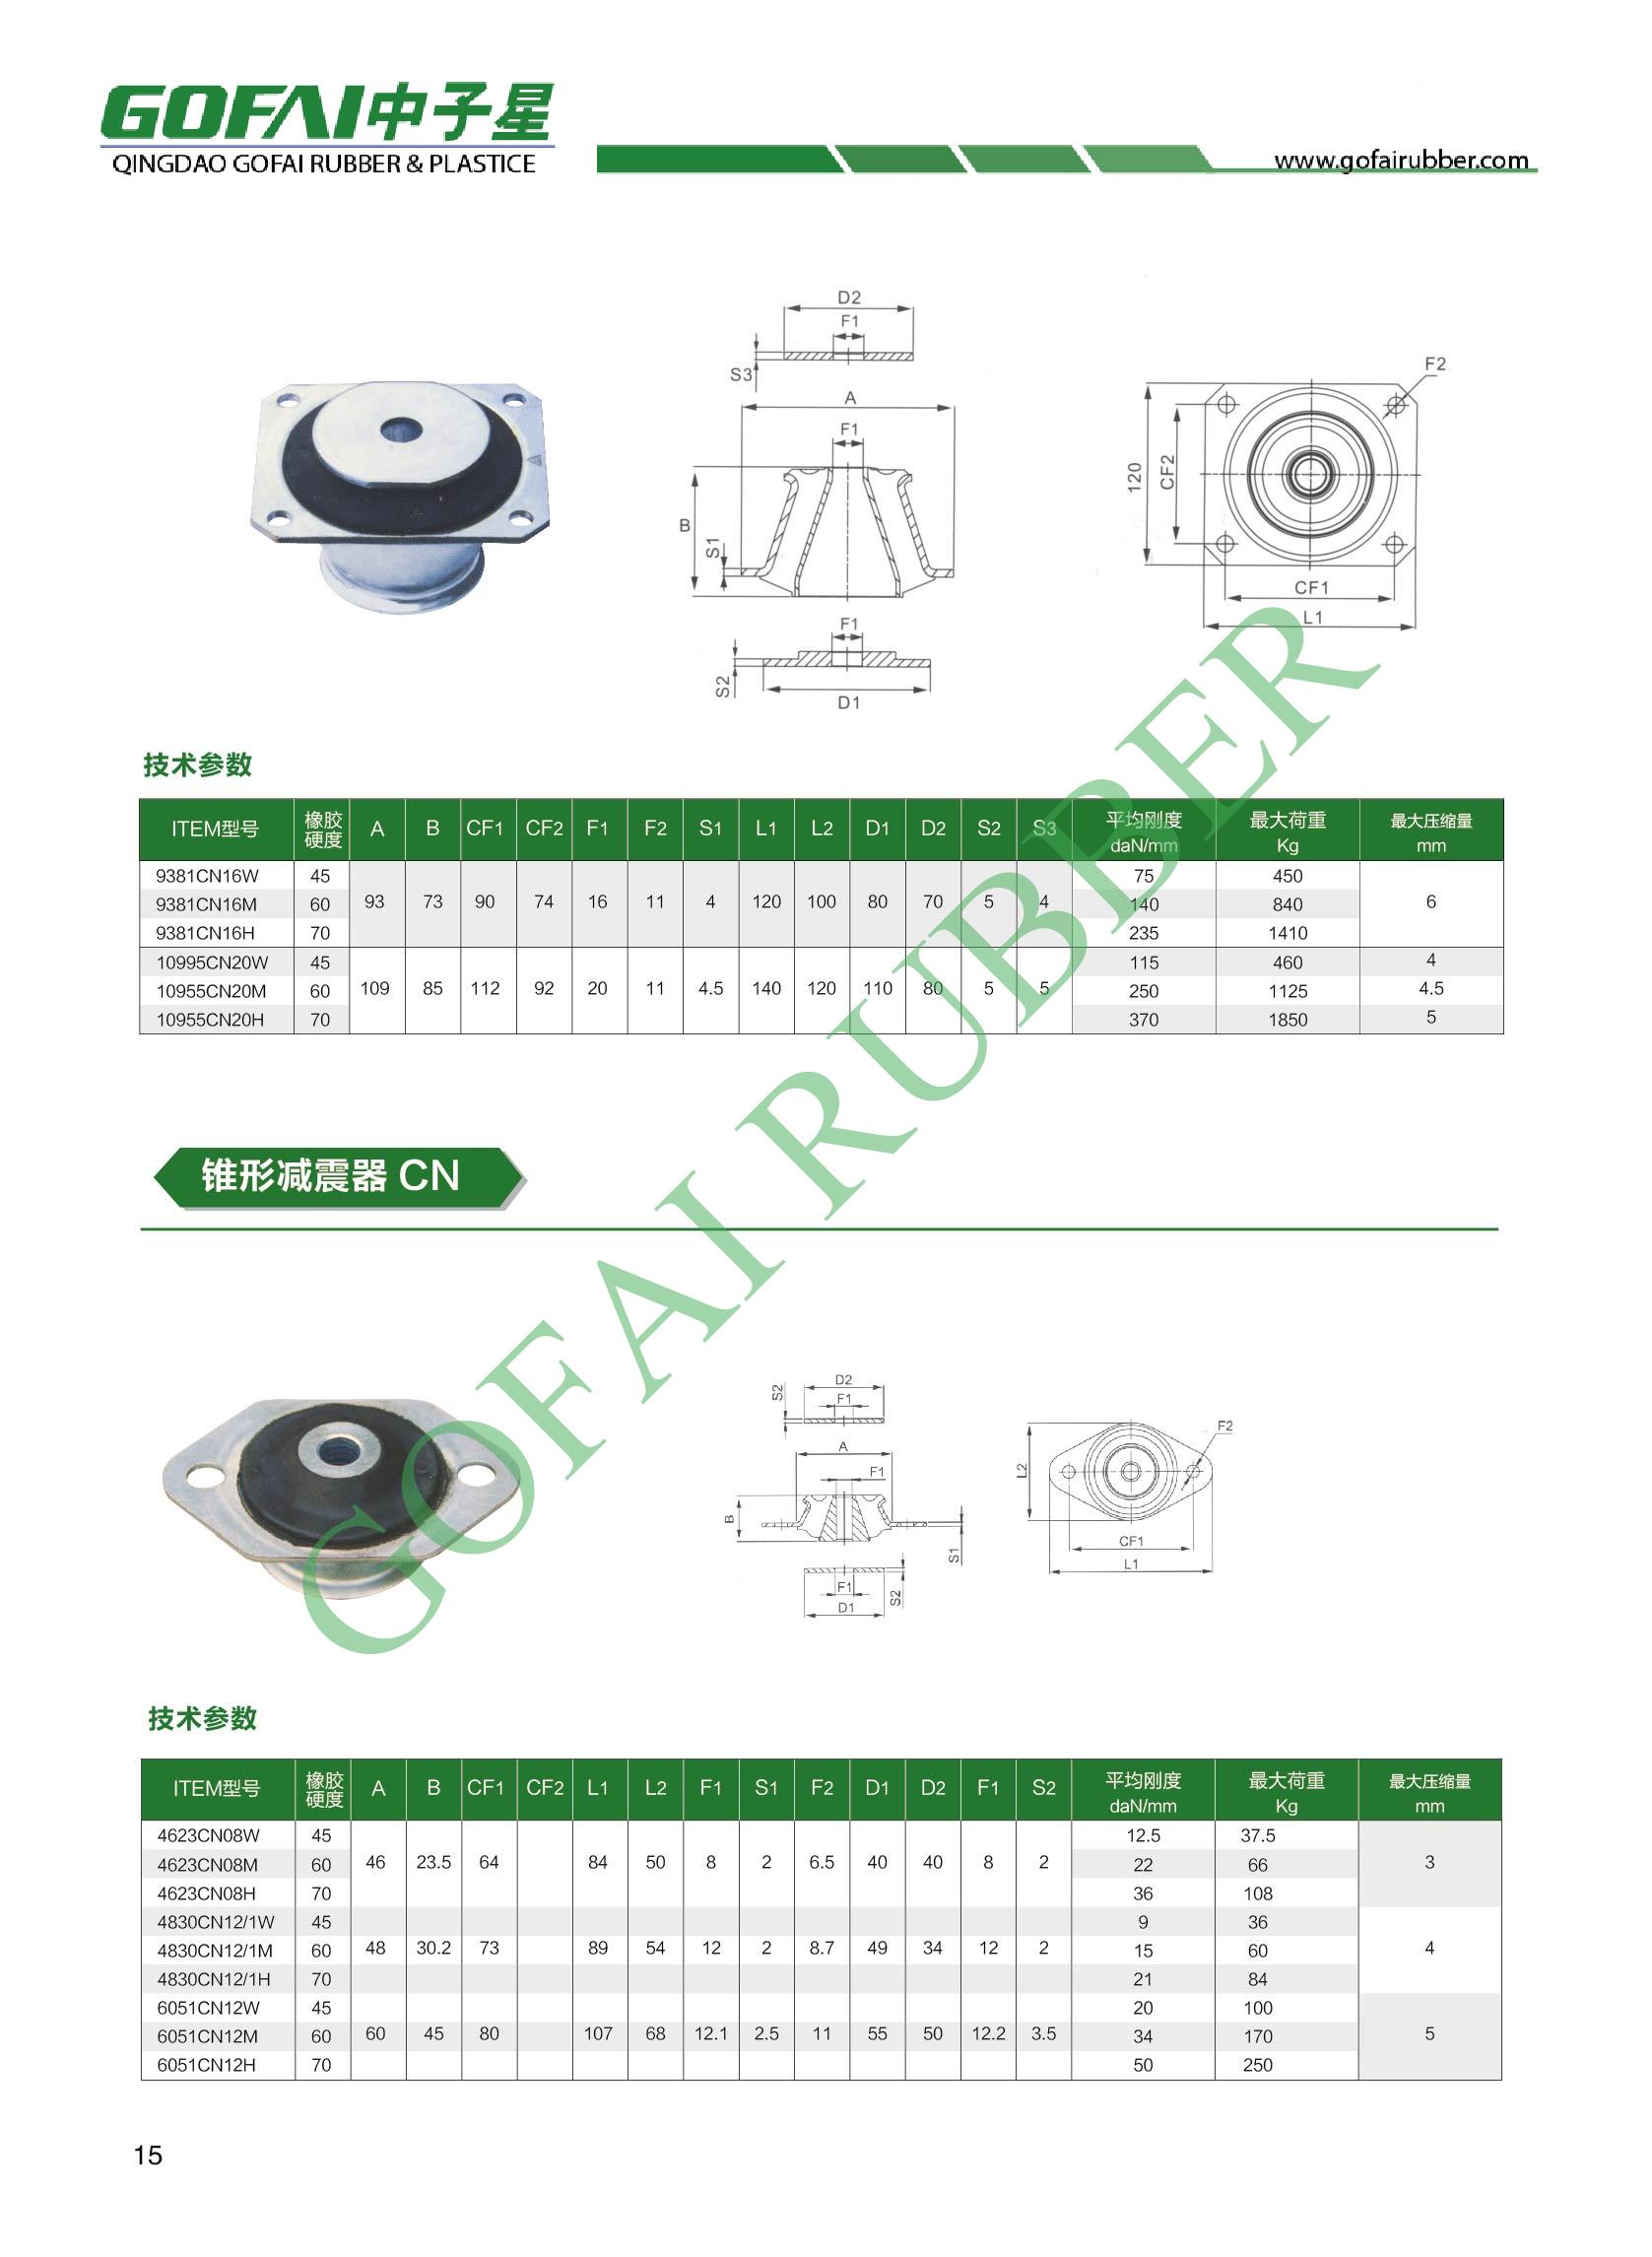 GOFAI catalog for rubber anti-vibration mounts_13.jpg